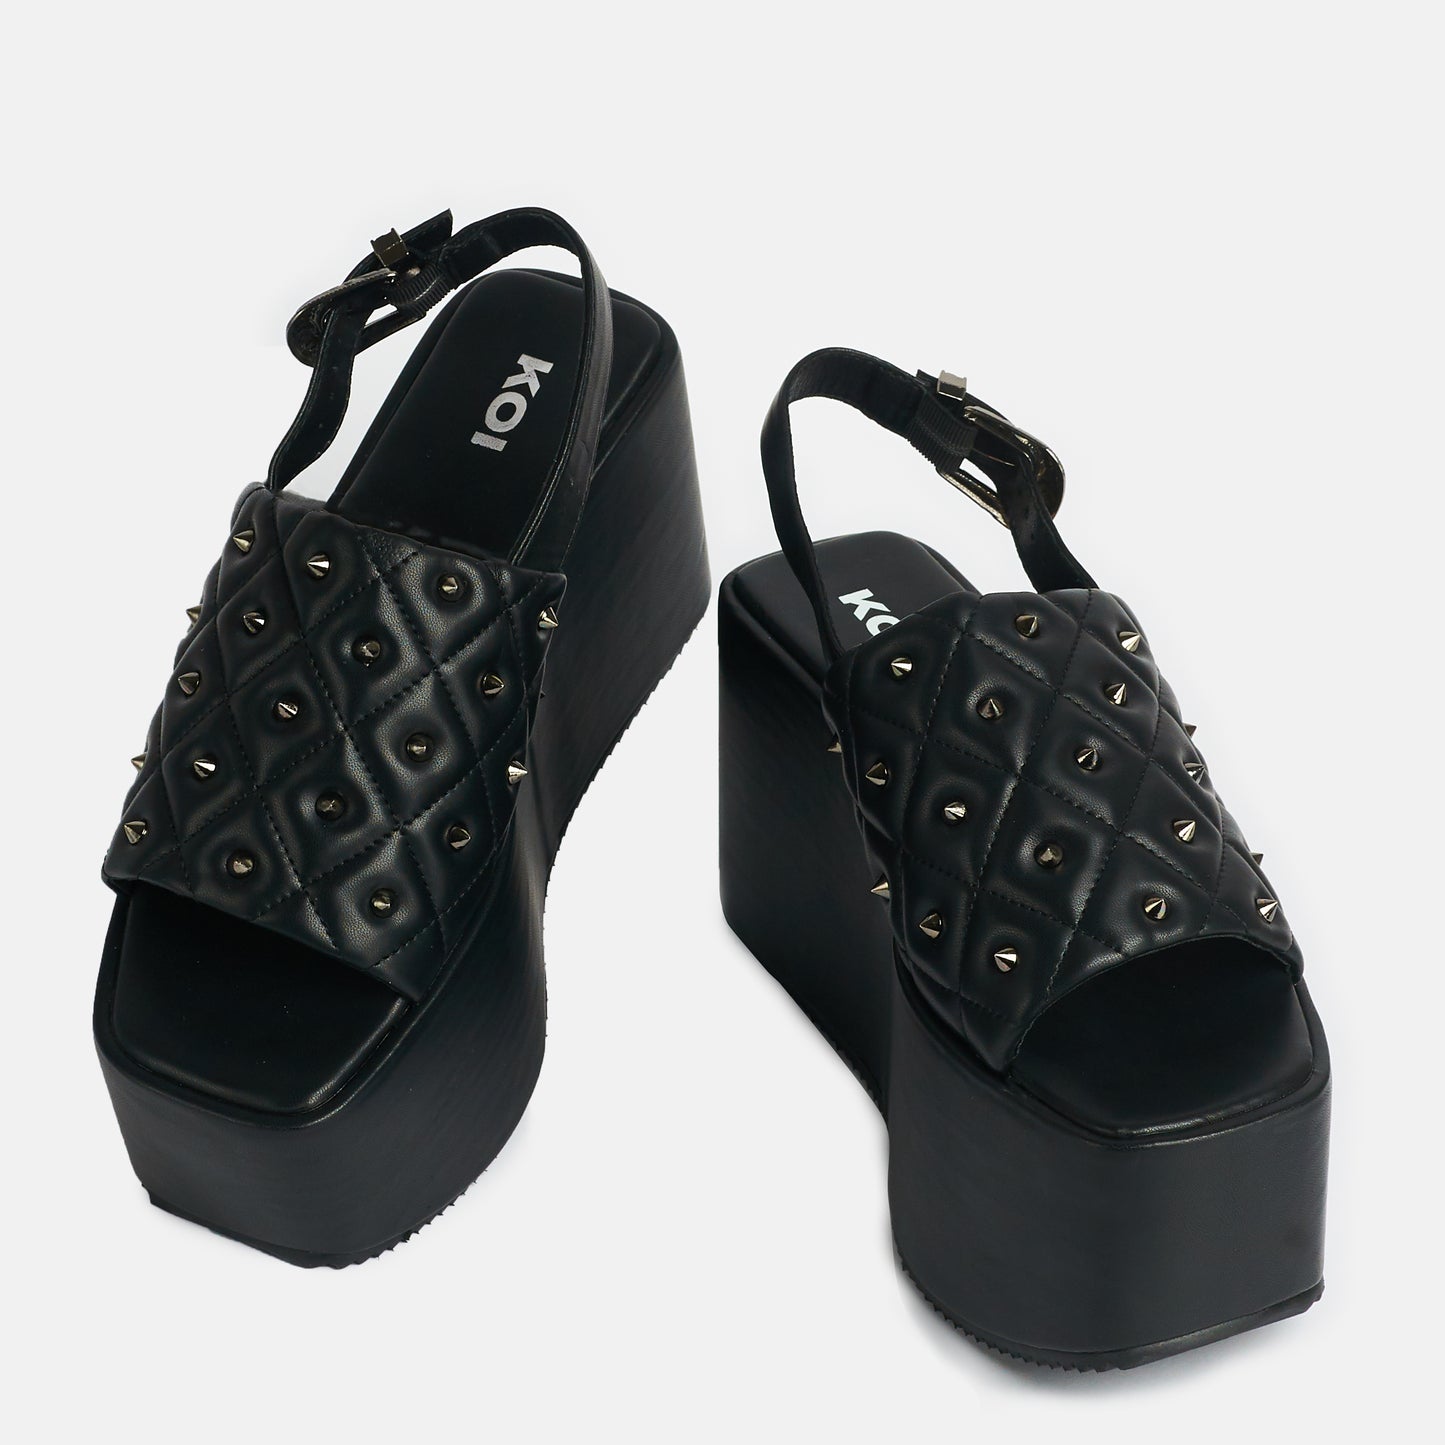 Imperial Web Mega Platform Sandals - Sandals - KOI Footwear - Black - Front View